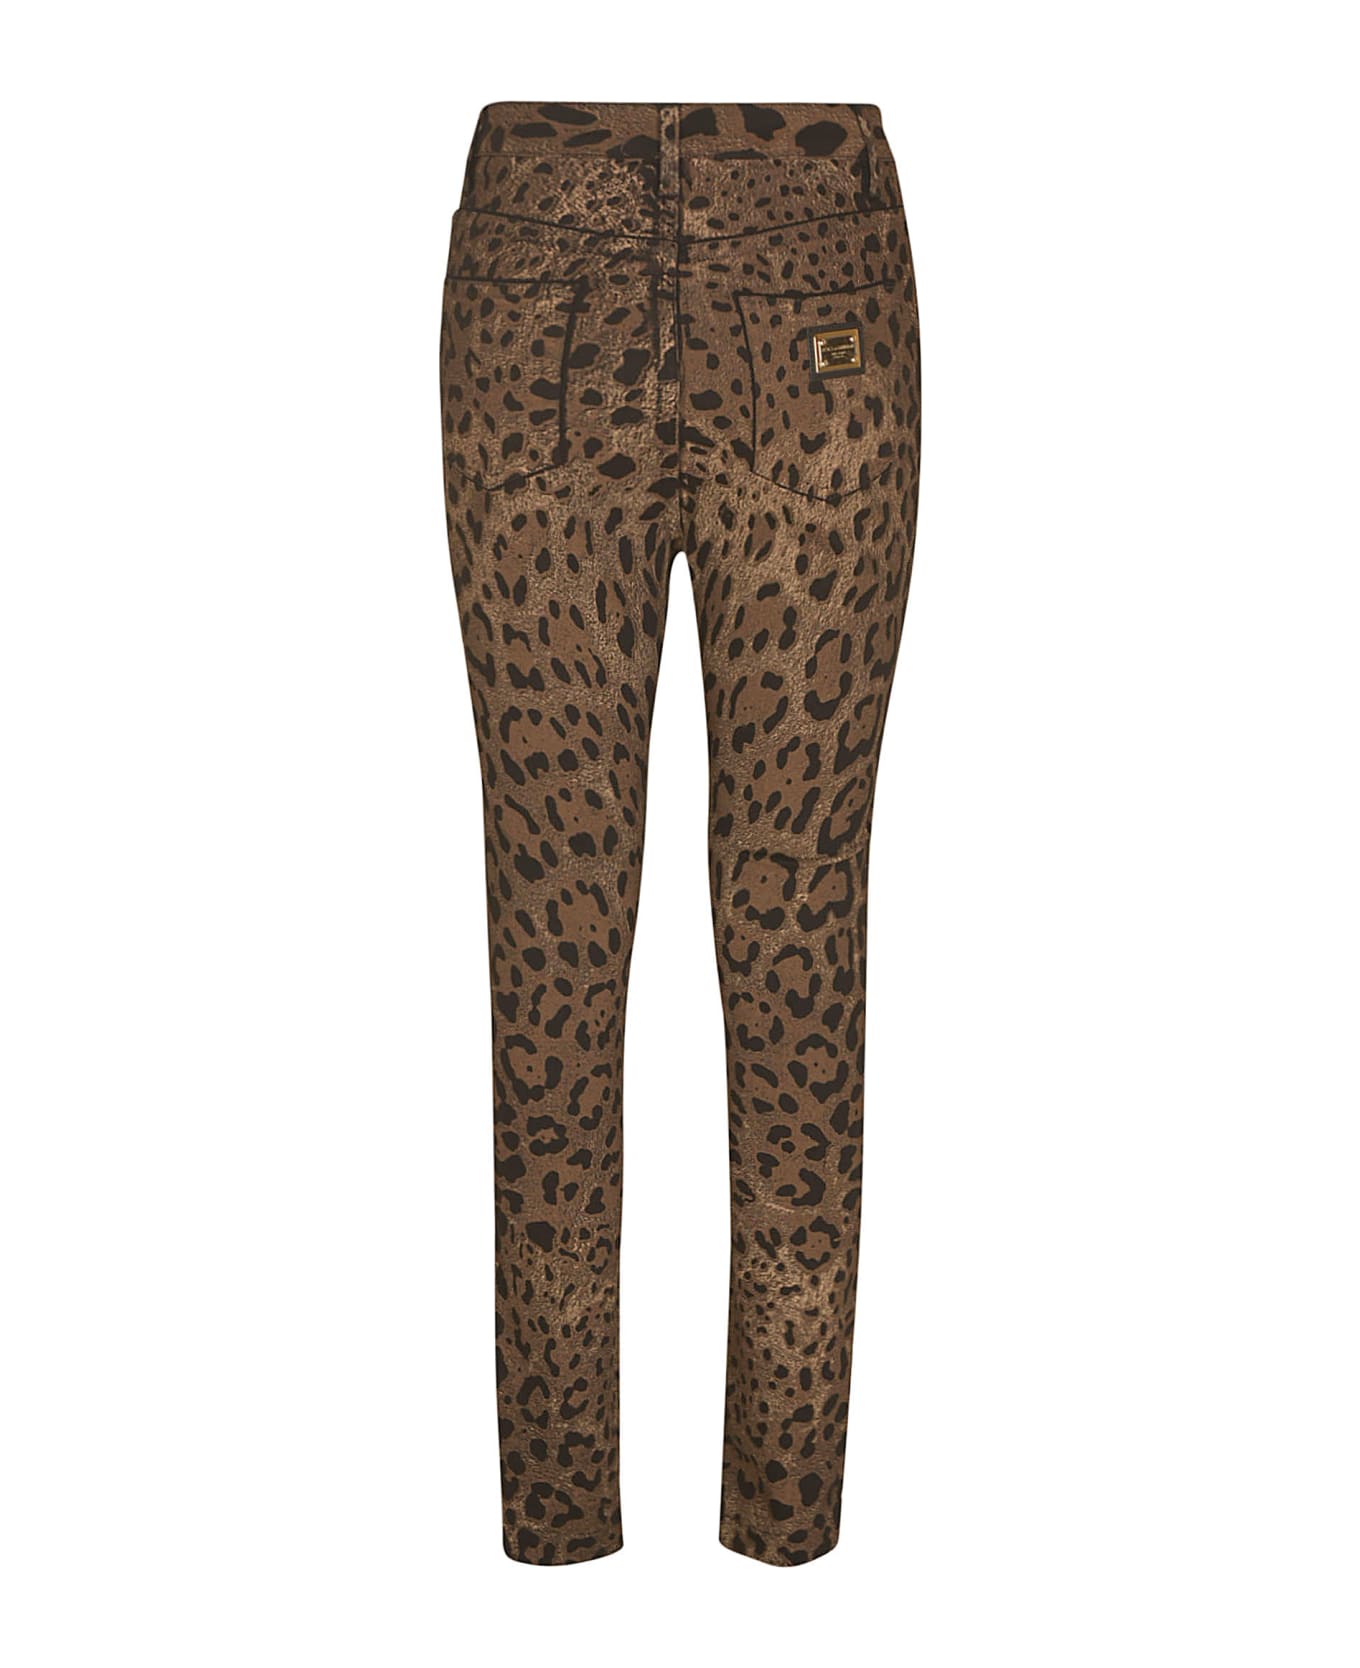 Dolce & Gabbana Animal Print Jeans - Brown/Black